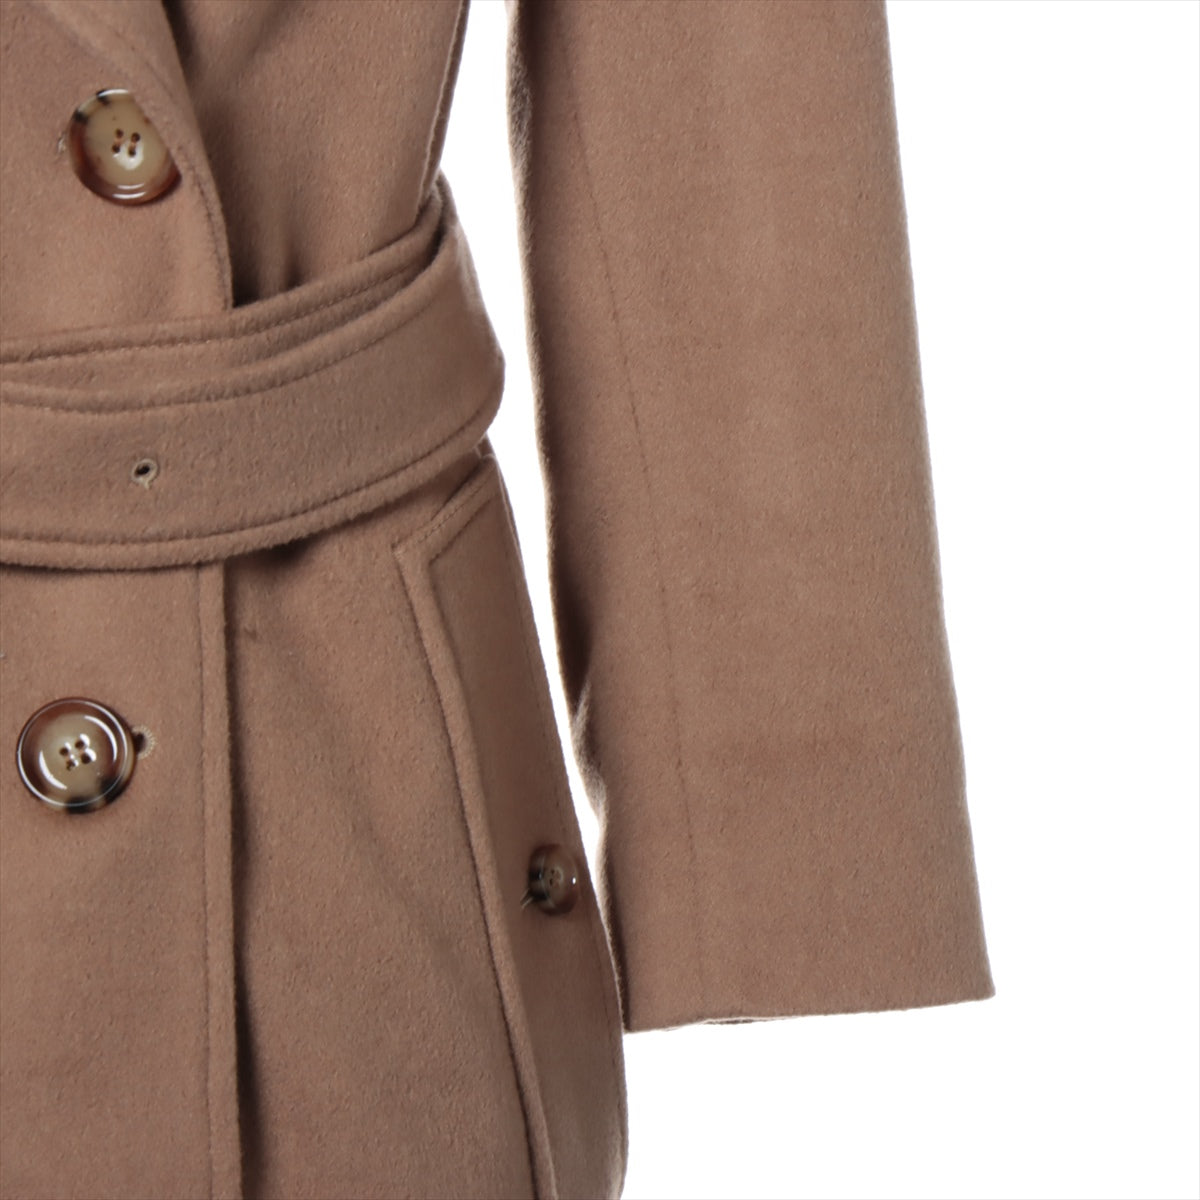 Burberry Kensington Wool & Cashmere Trench Coat IT34 Ladies' Beige  8058195 Tisci Period